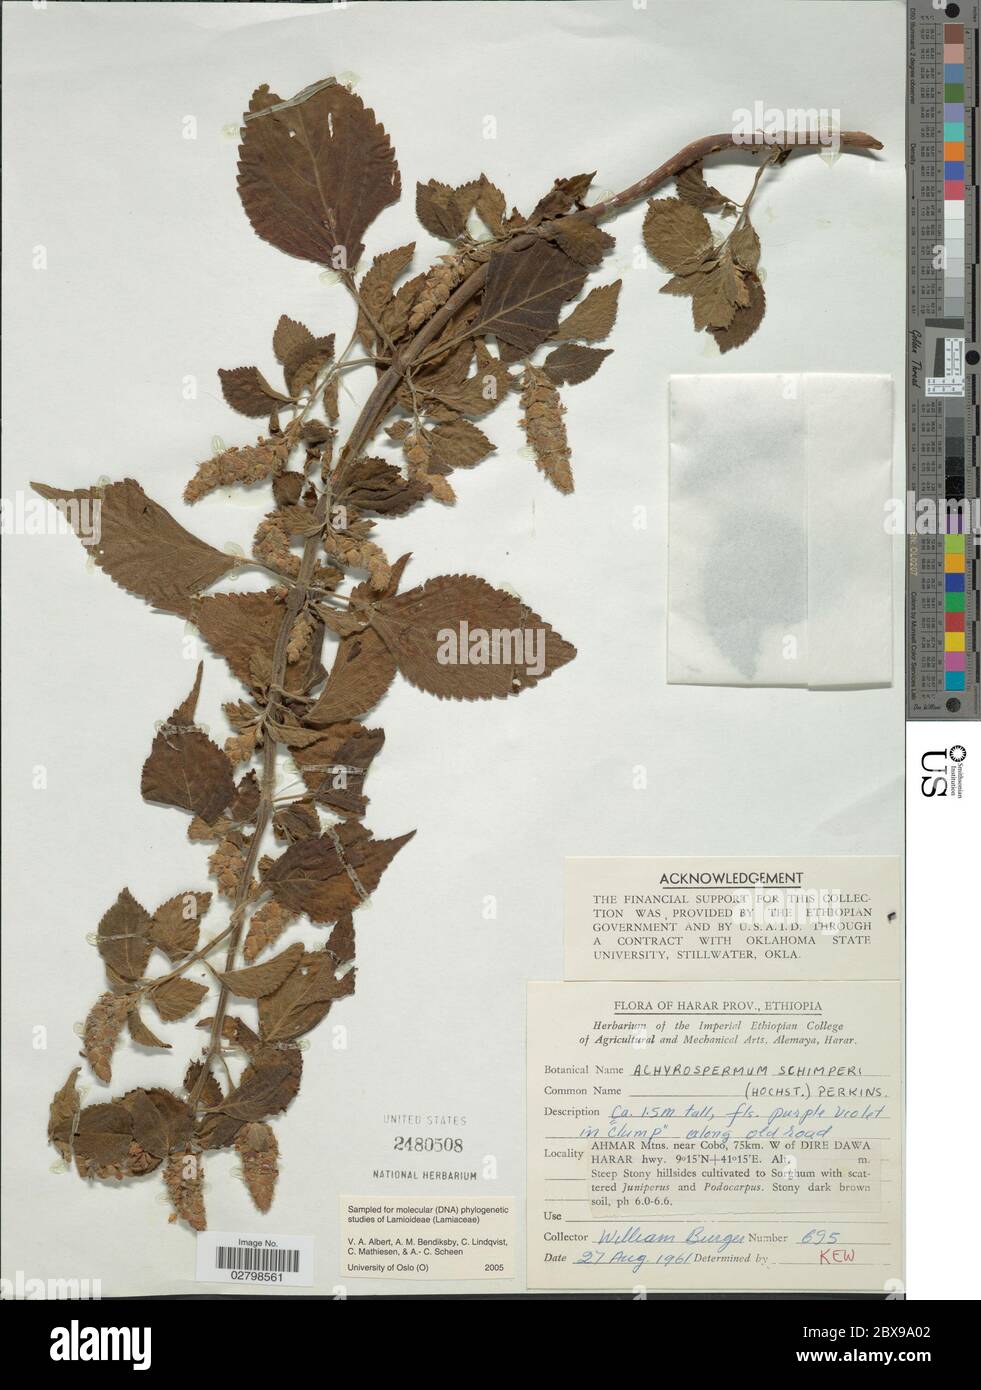 Achyrospermum schimperi Hochst ex Briq Perkins Achyrospermum schimperi Hochst ex Briq Perkins. Stock Photo